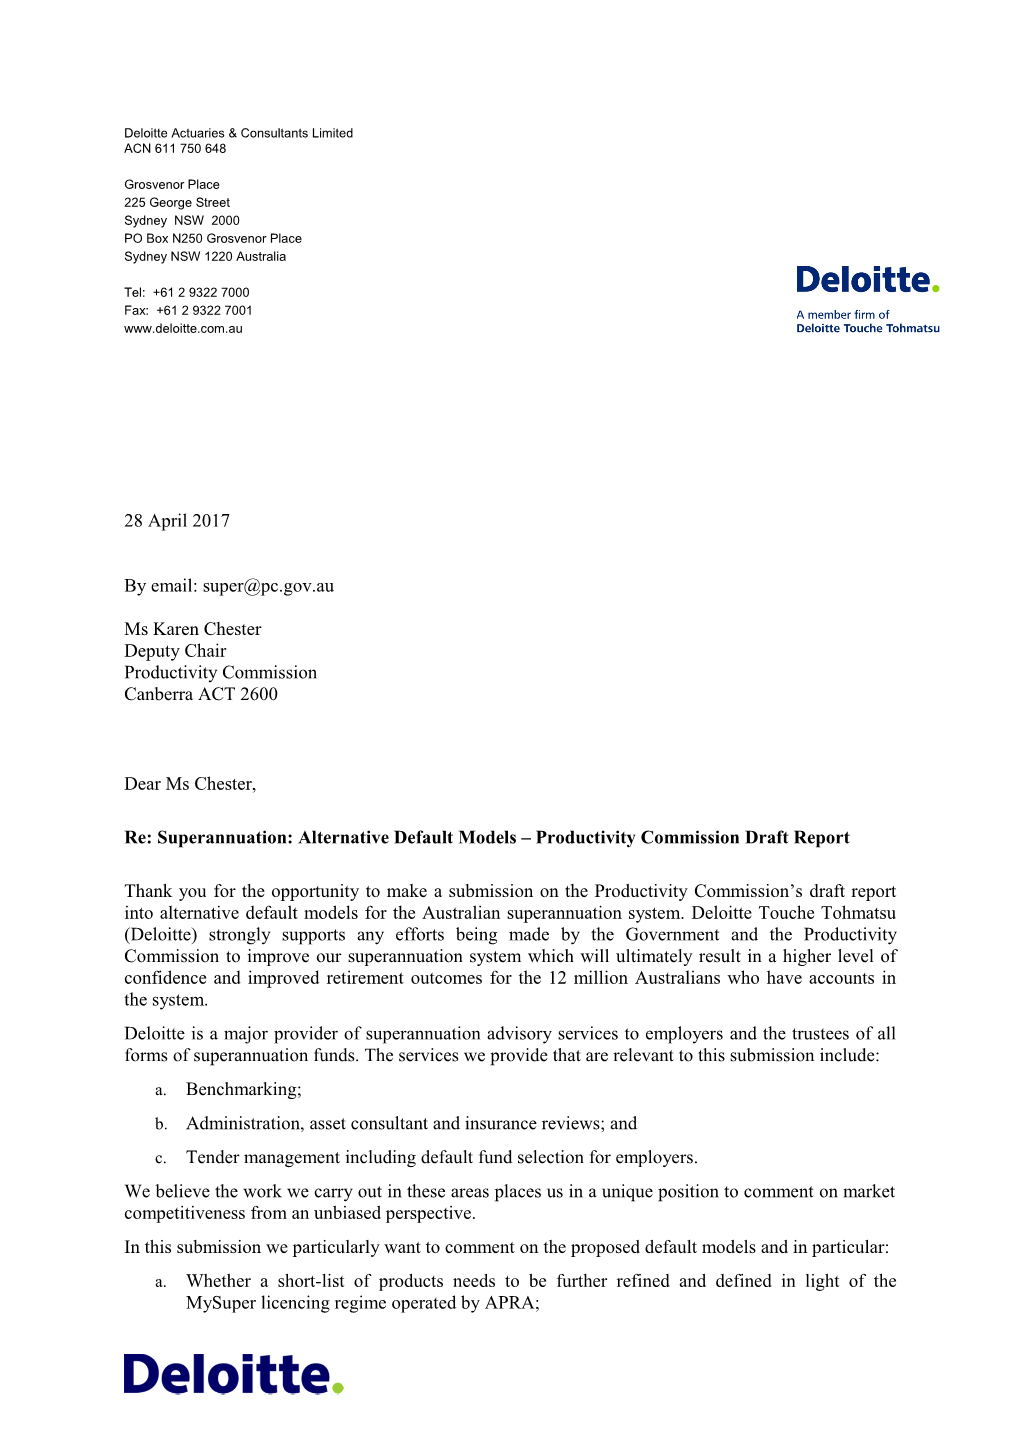 Submission DR61 - Deloitte Touche Tohmatsu (Deloitte) - Alternative Default Fund Models